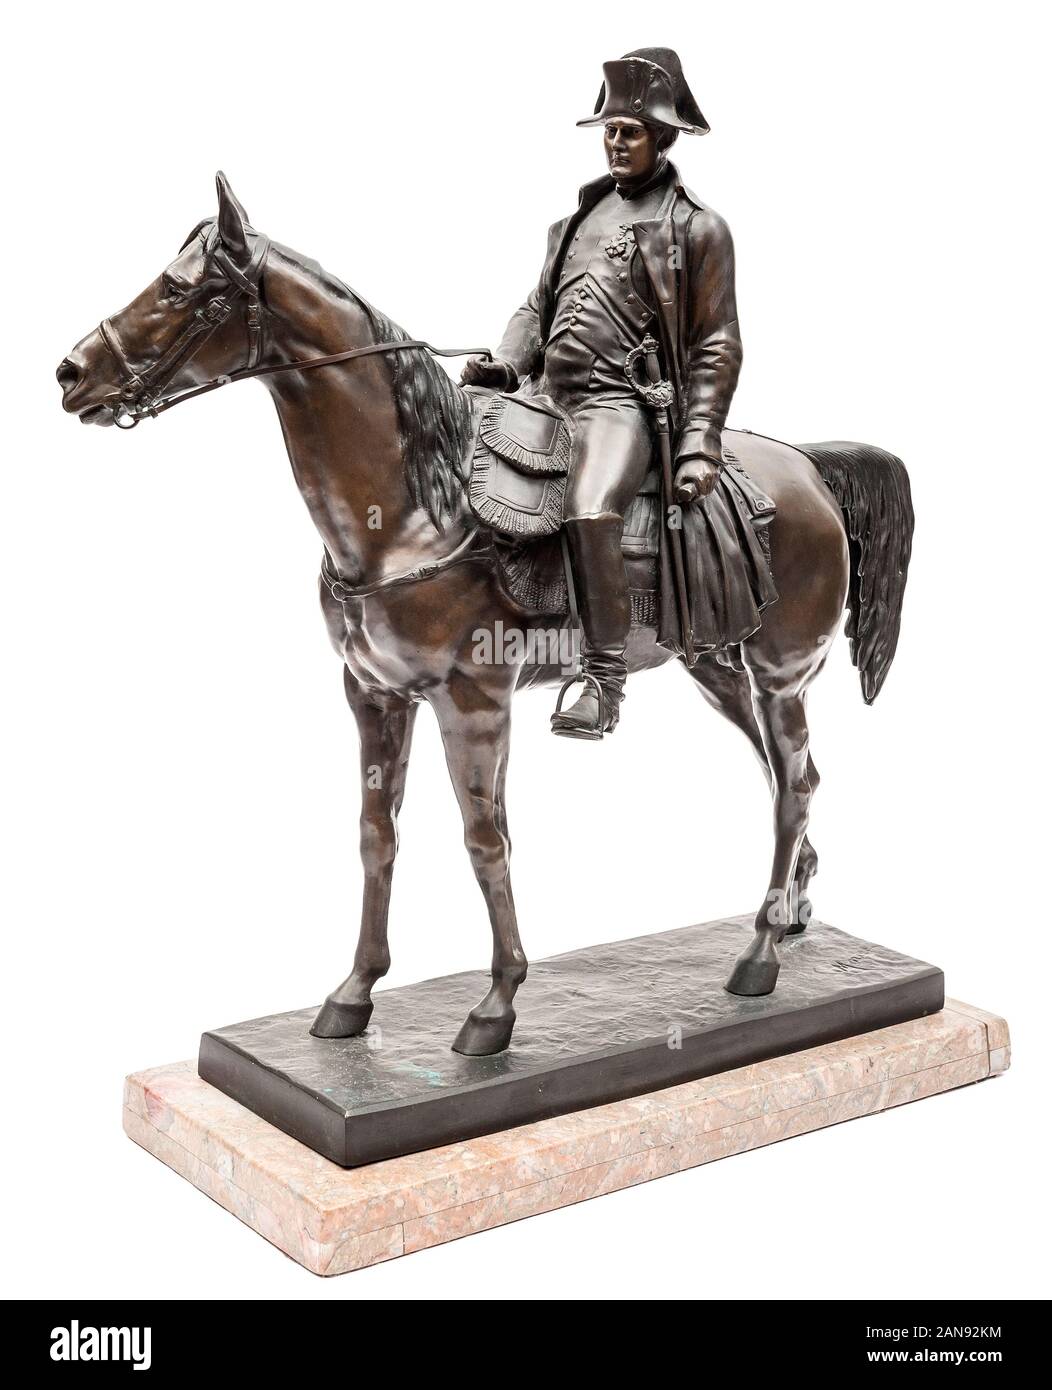 The French Emperor Napoleon Bonaparte on his horse Marengo Stock Photo